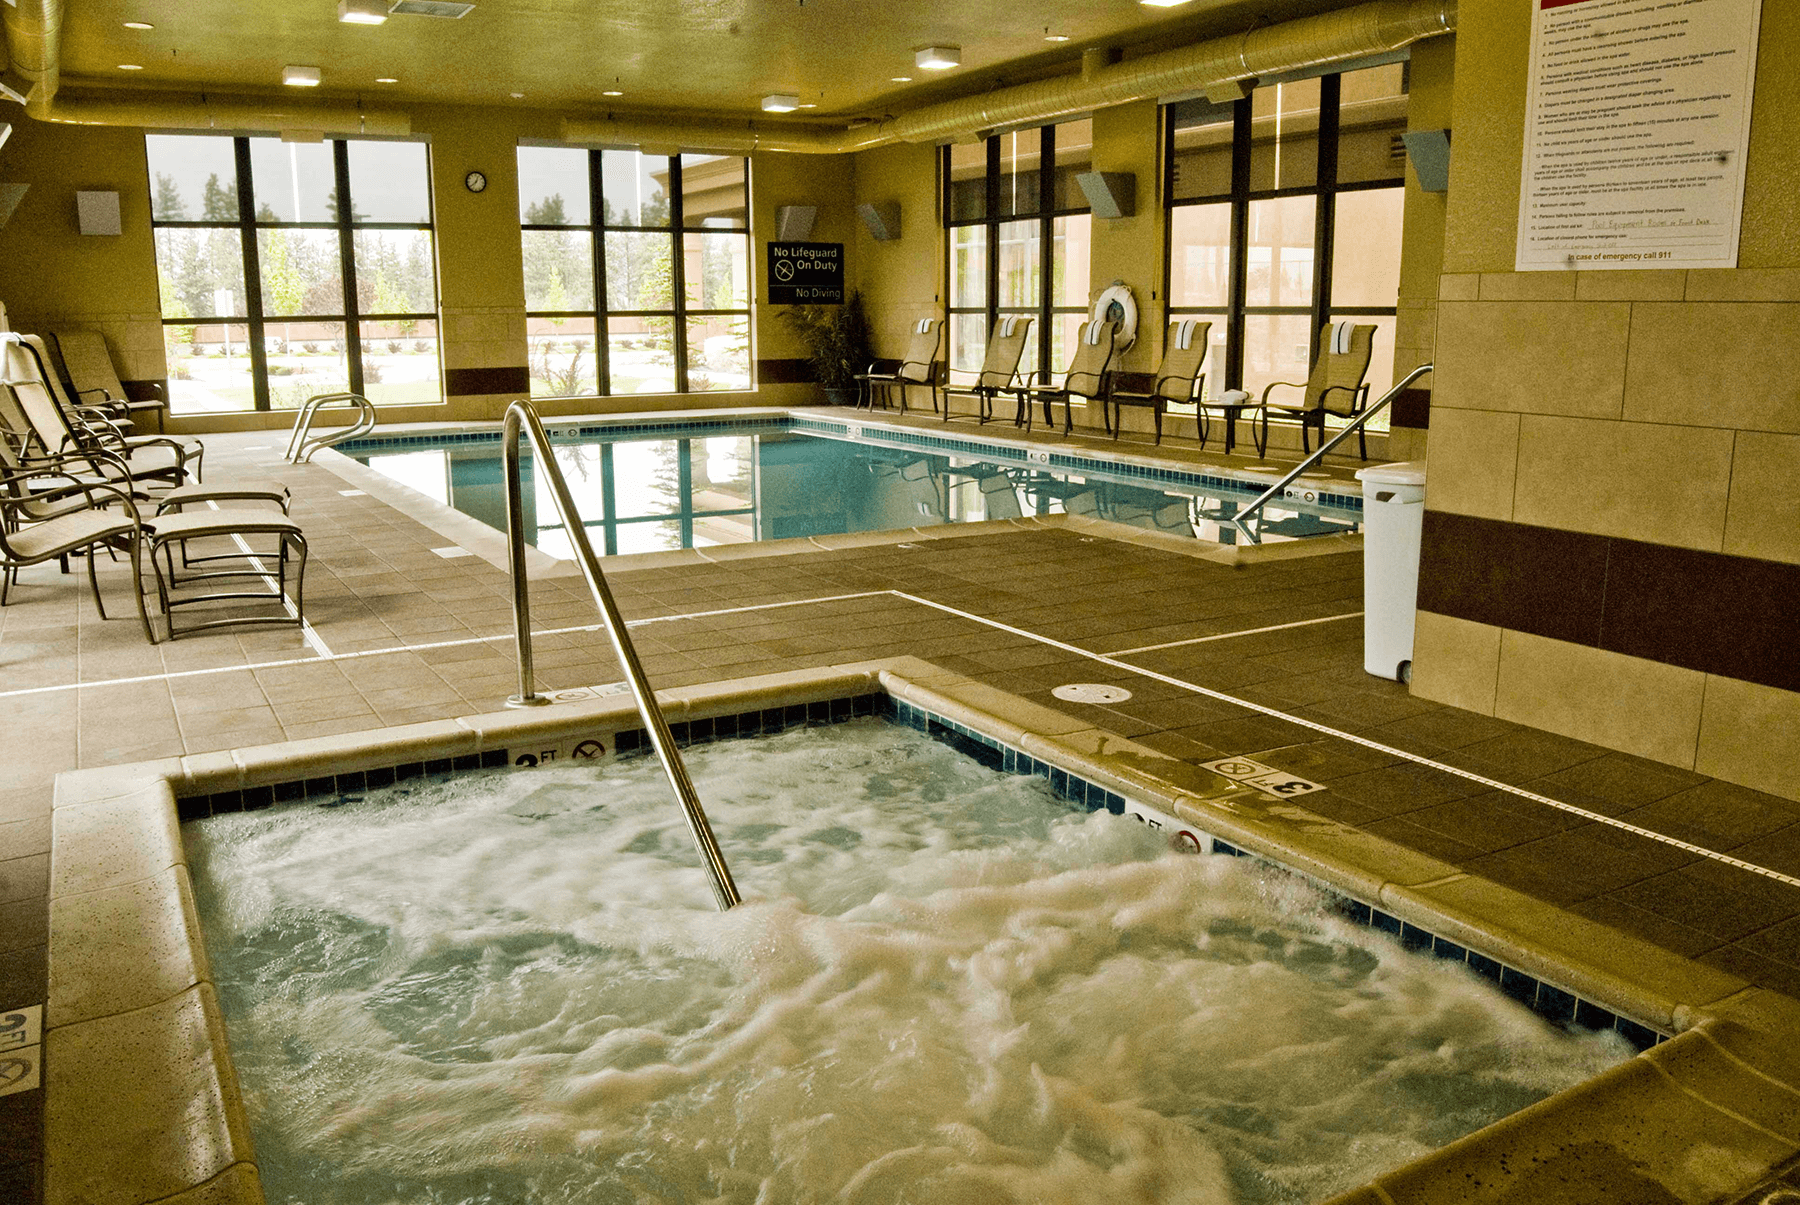  Hampton Inn and Suites Spokane indoor pool and hot tub 